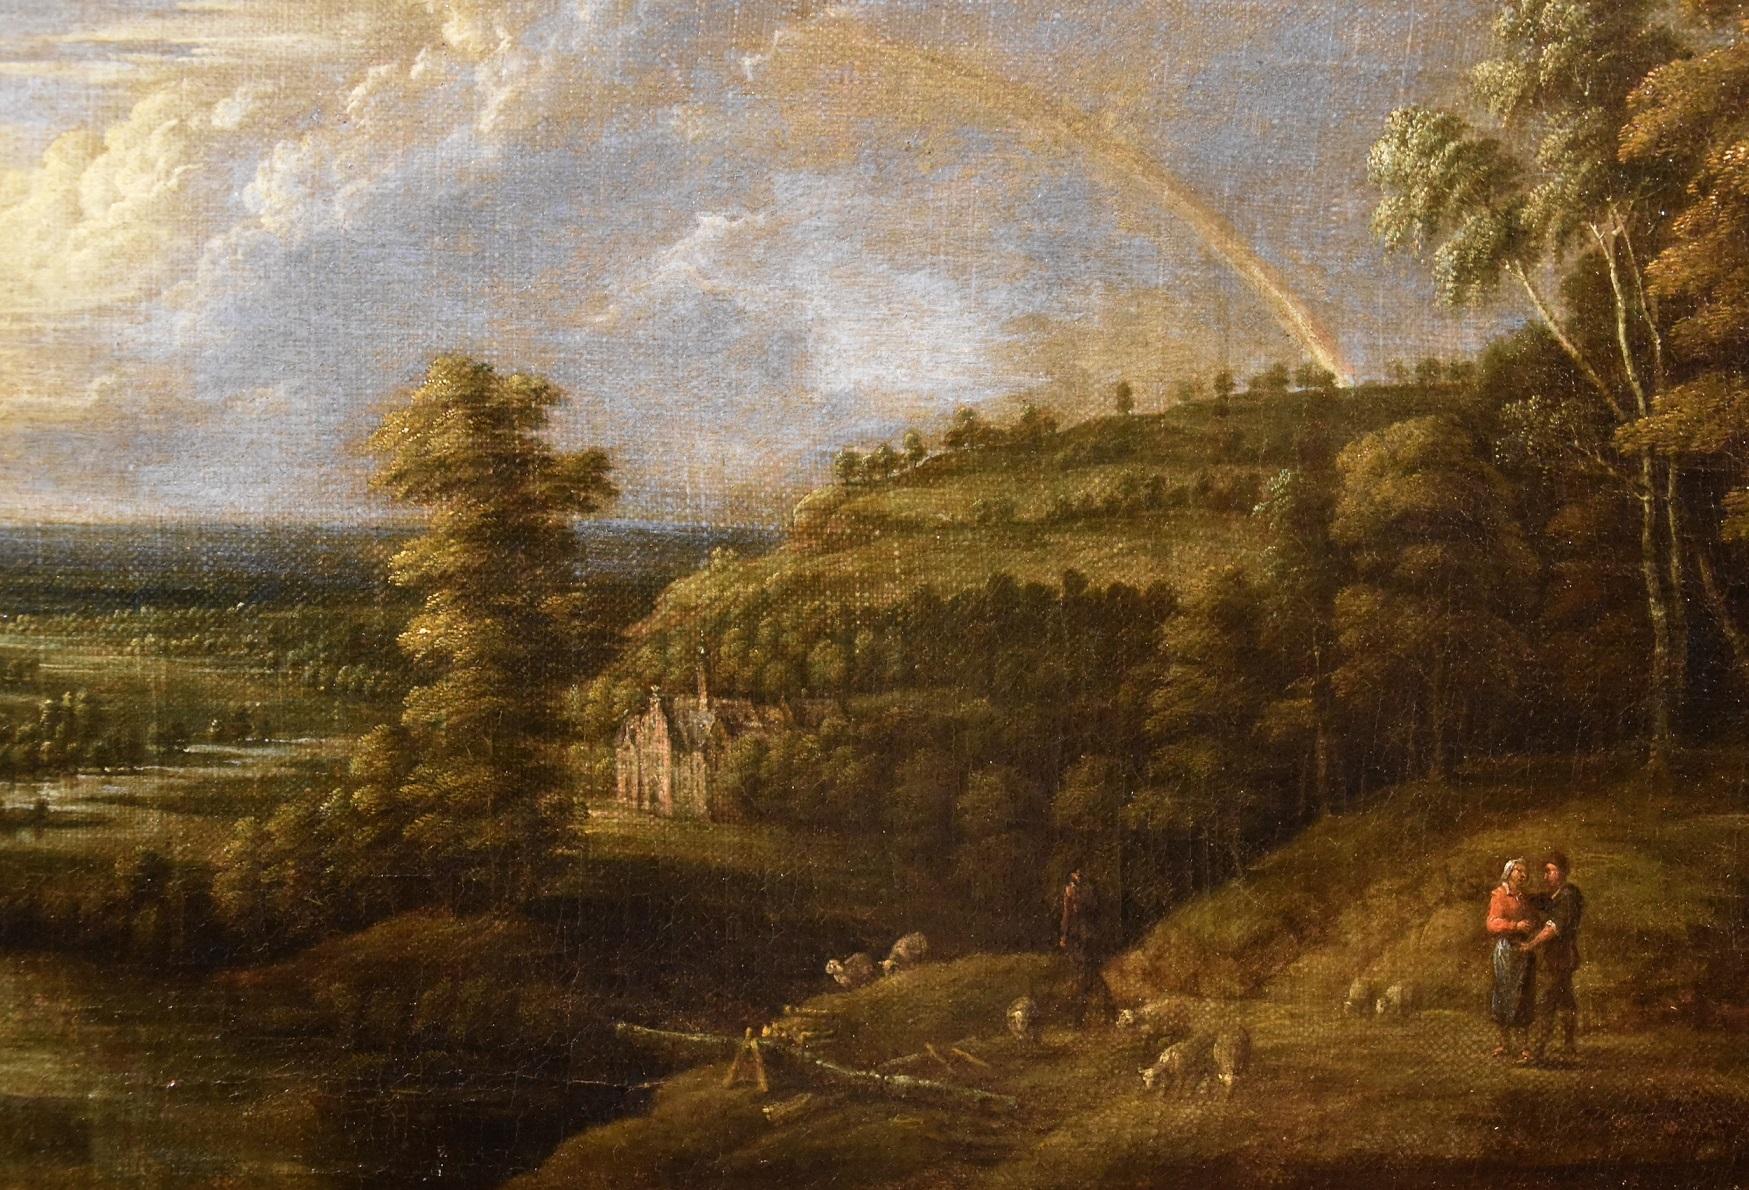 Van Uden Landscapes Paint Oil on canvas Old master 17th Century Flemish Wood Art - Beige Landscape Painting by Lucas Van Uden (Antwerp 1595 - Antwerp 1672)